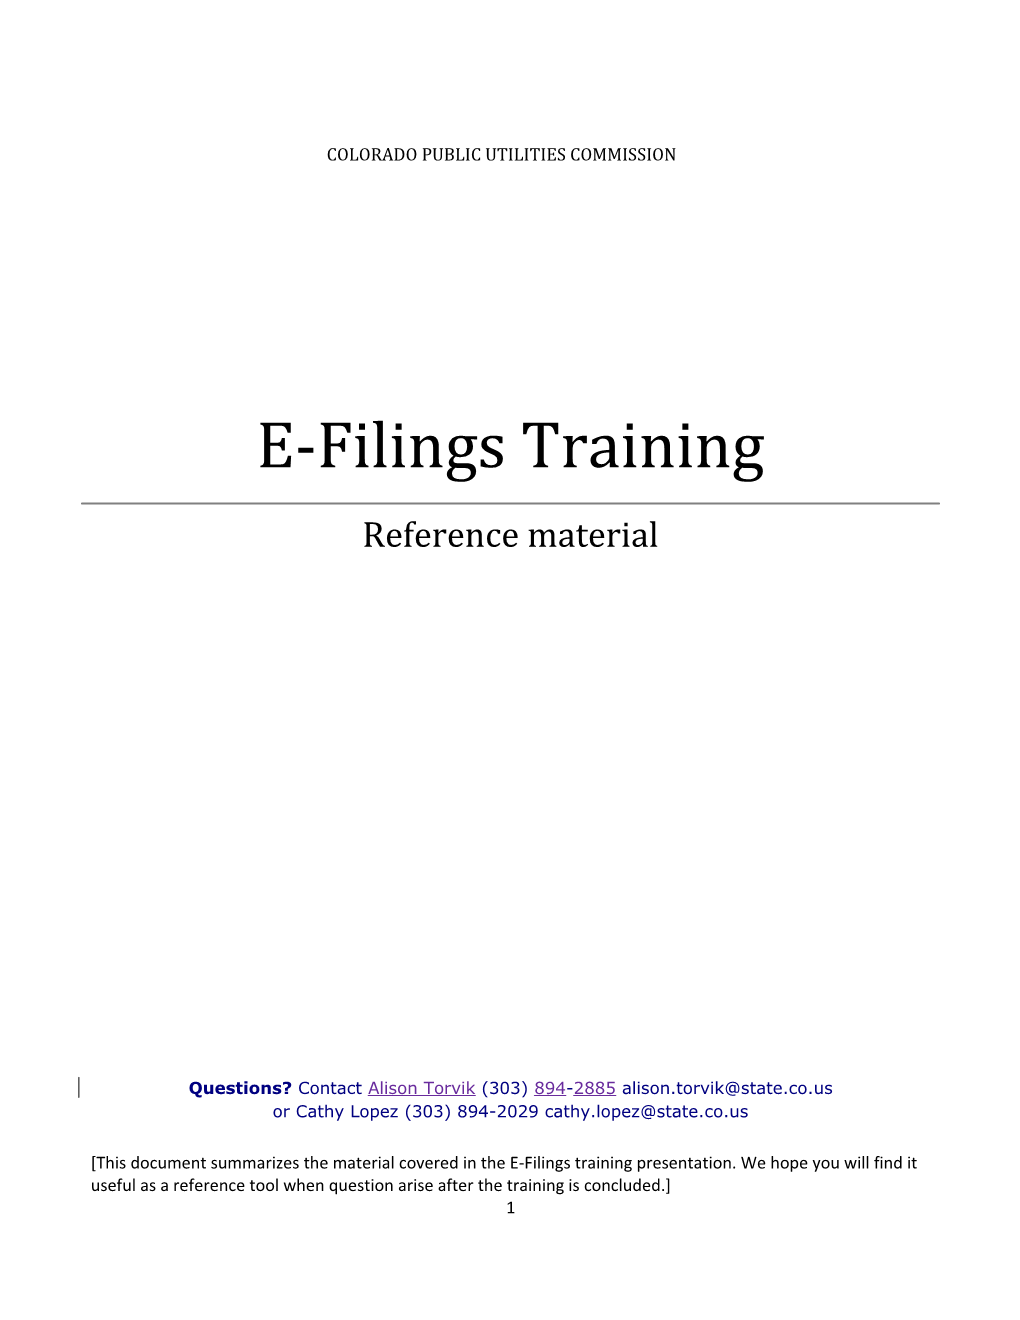 E-Filings Training - Handout